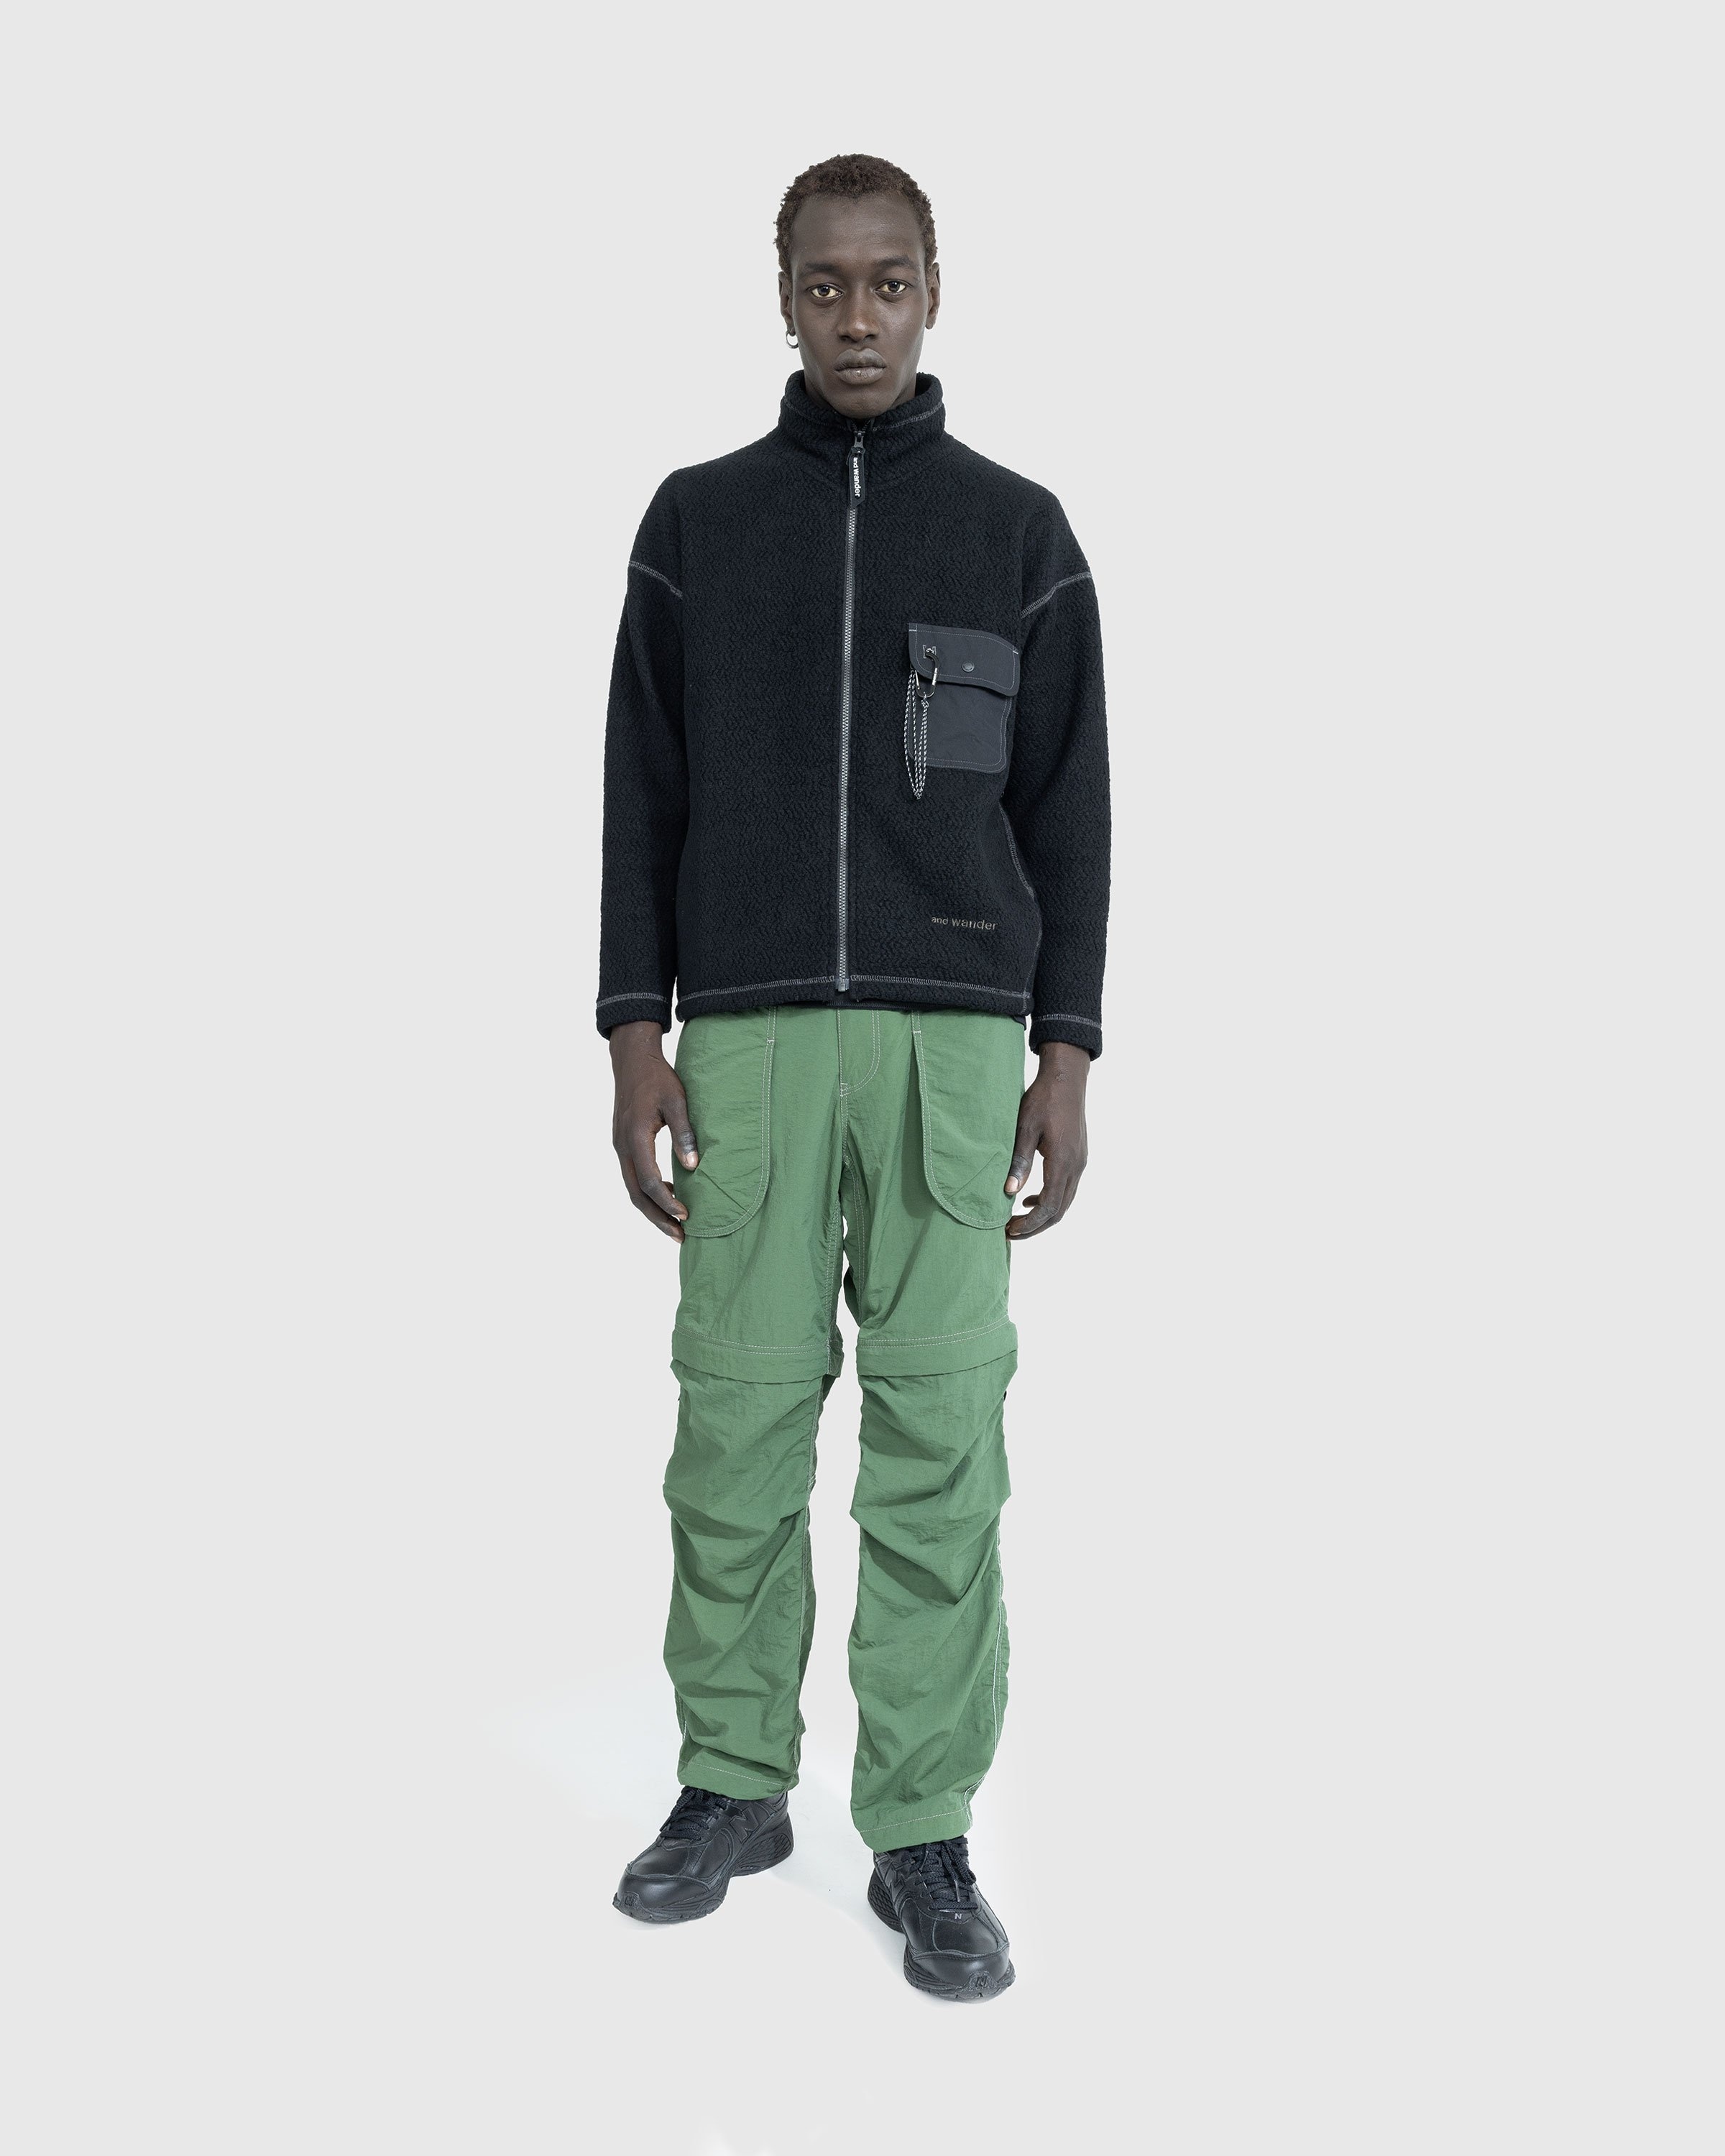 And Wander – Wool JQ Stand Zip Jacket Black | Highsnobiety Shop